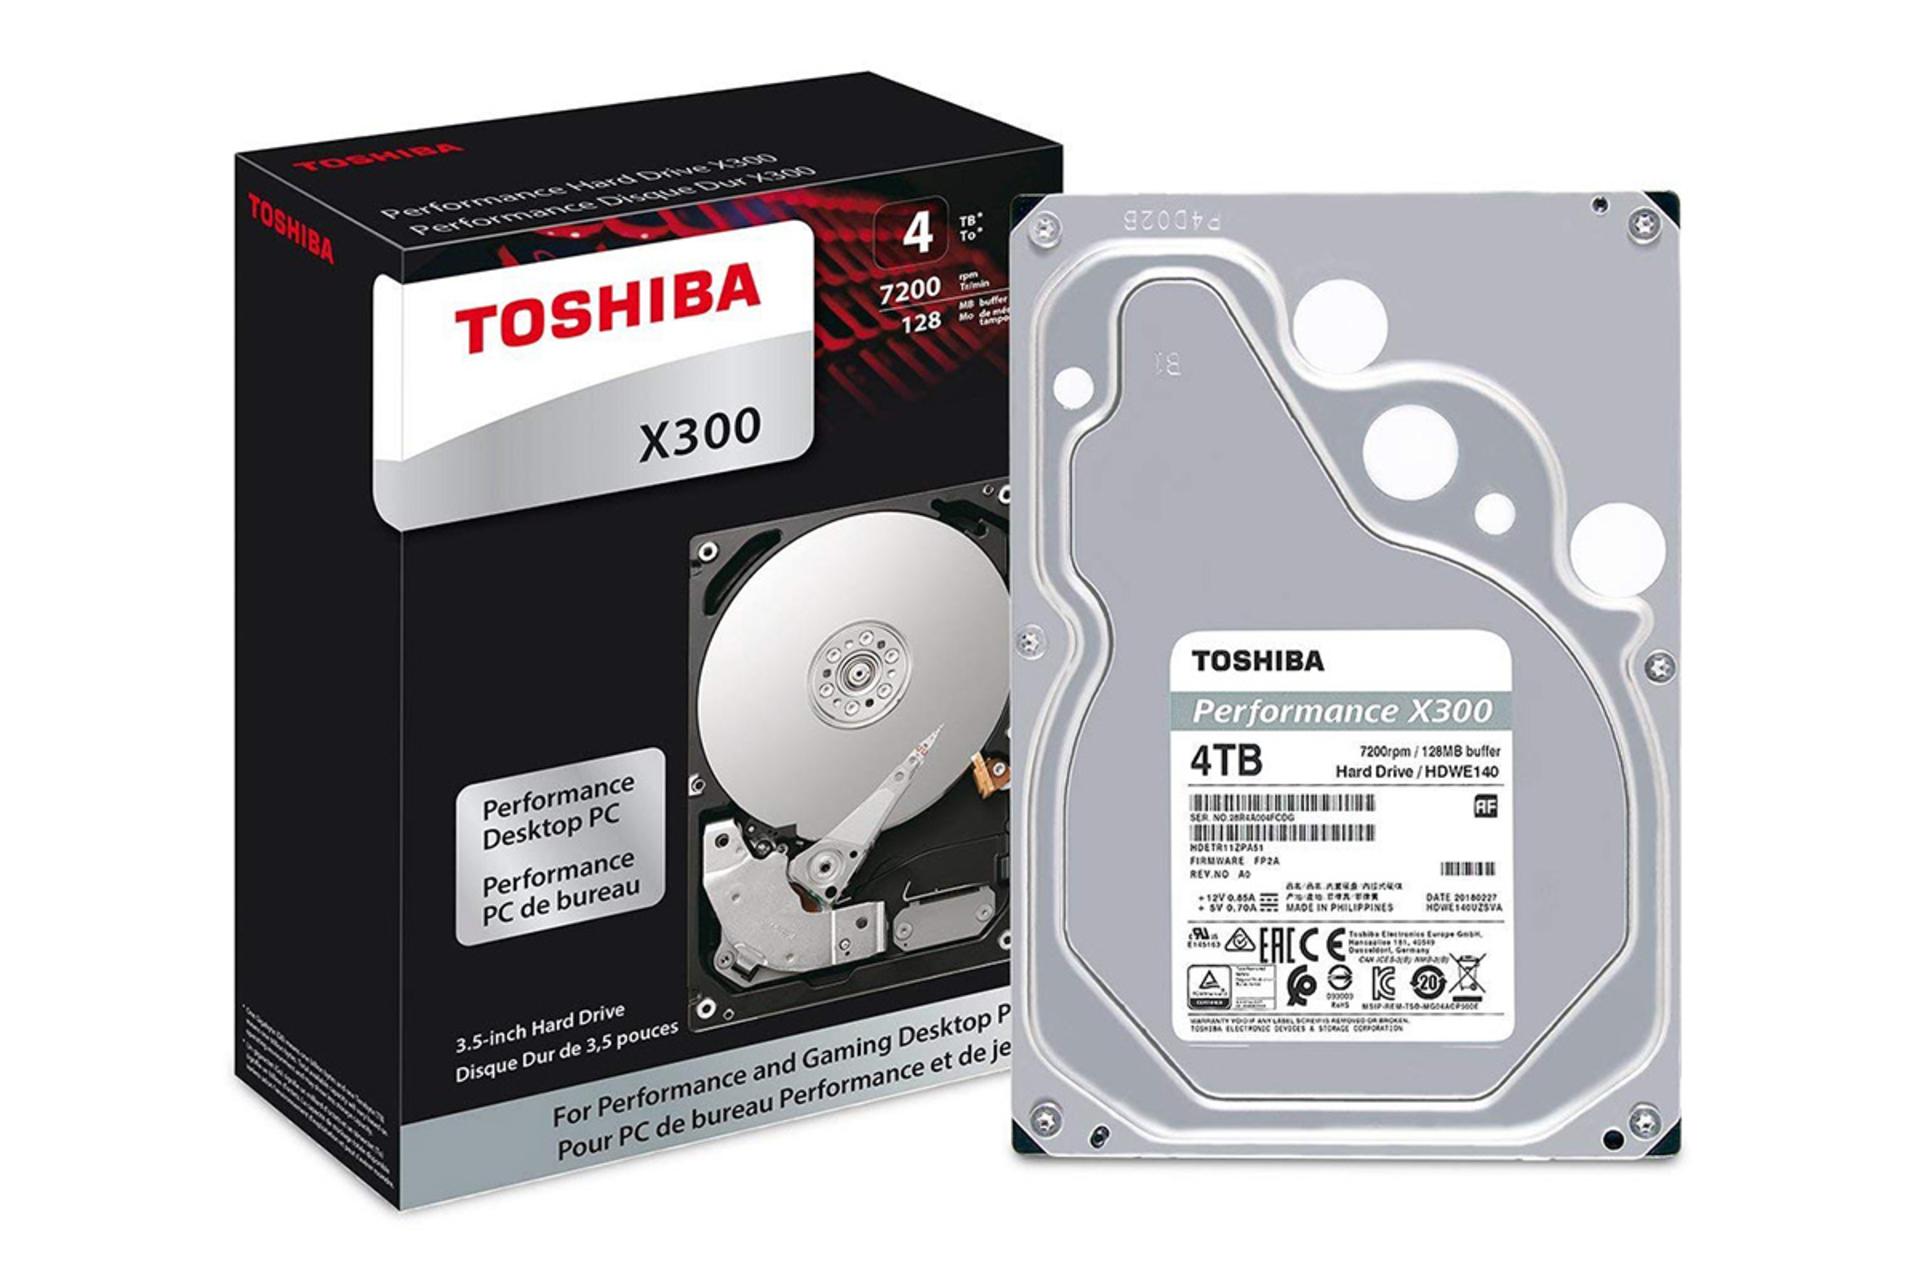 Toshiba X300 HDWE140 4TB